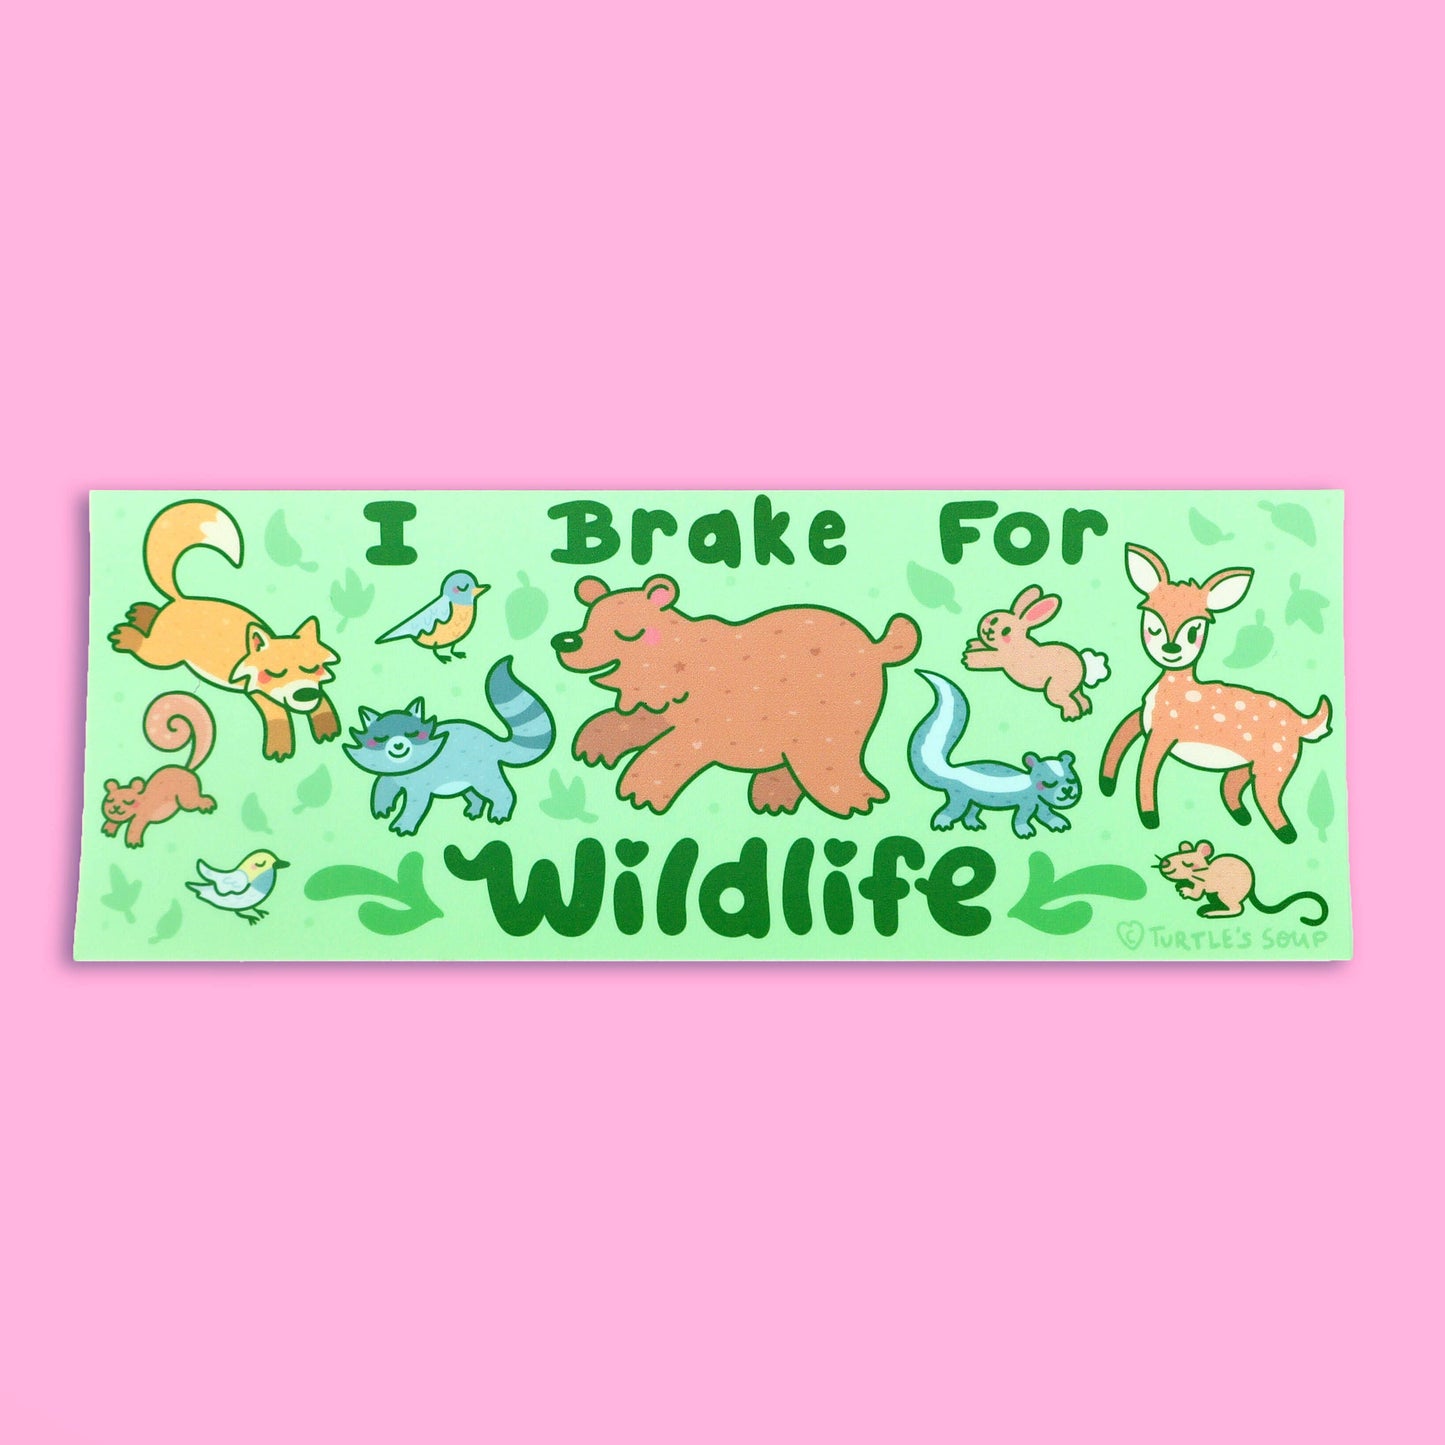 I Brake For Wildlife Bumper Sticker